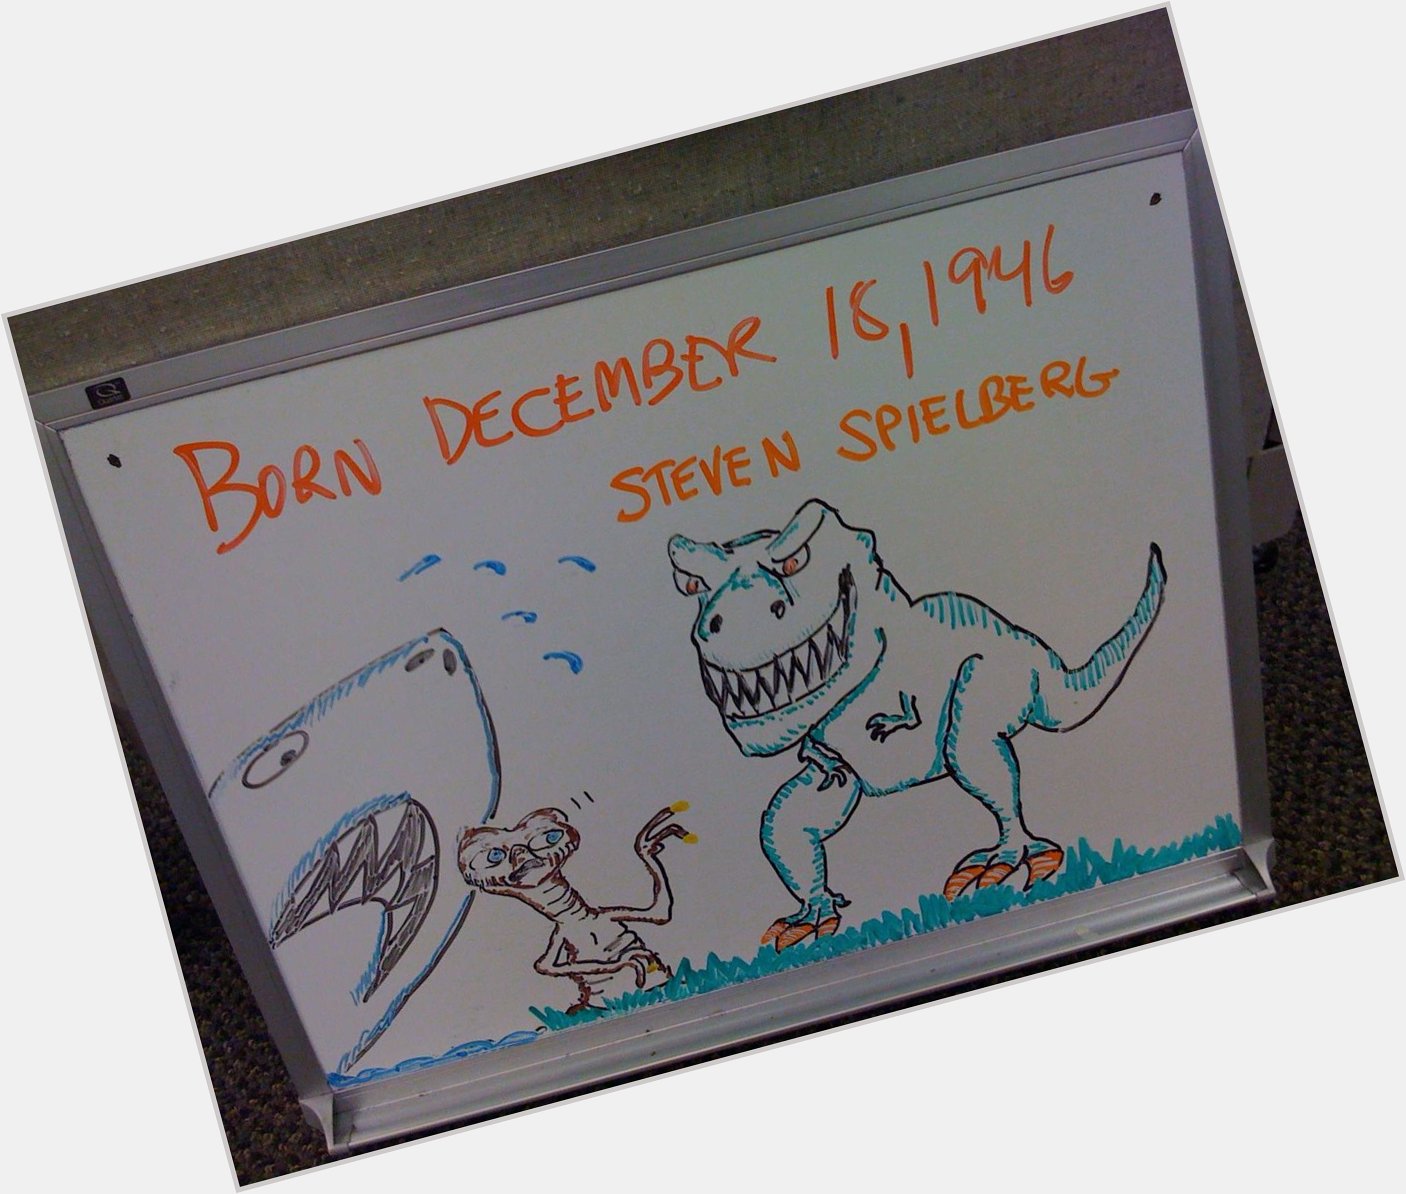 A little late, but happy birthday Steven Spielberg 